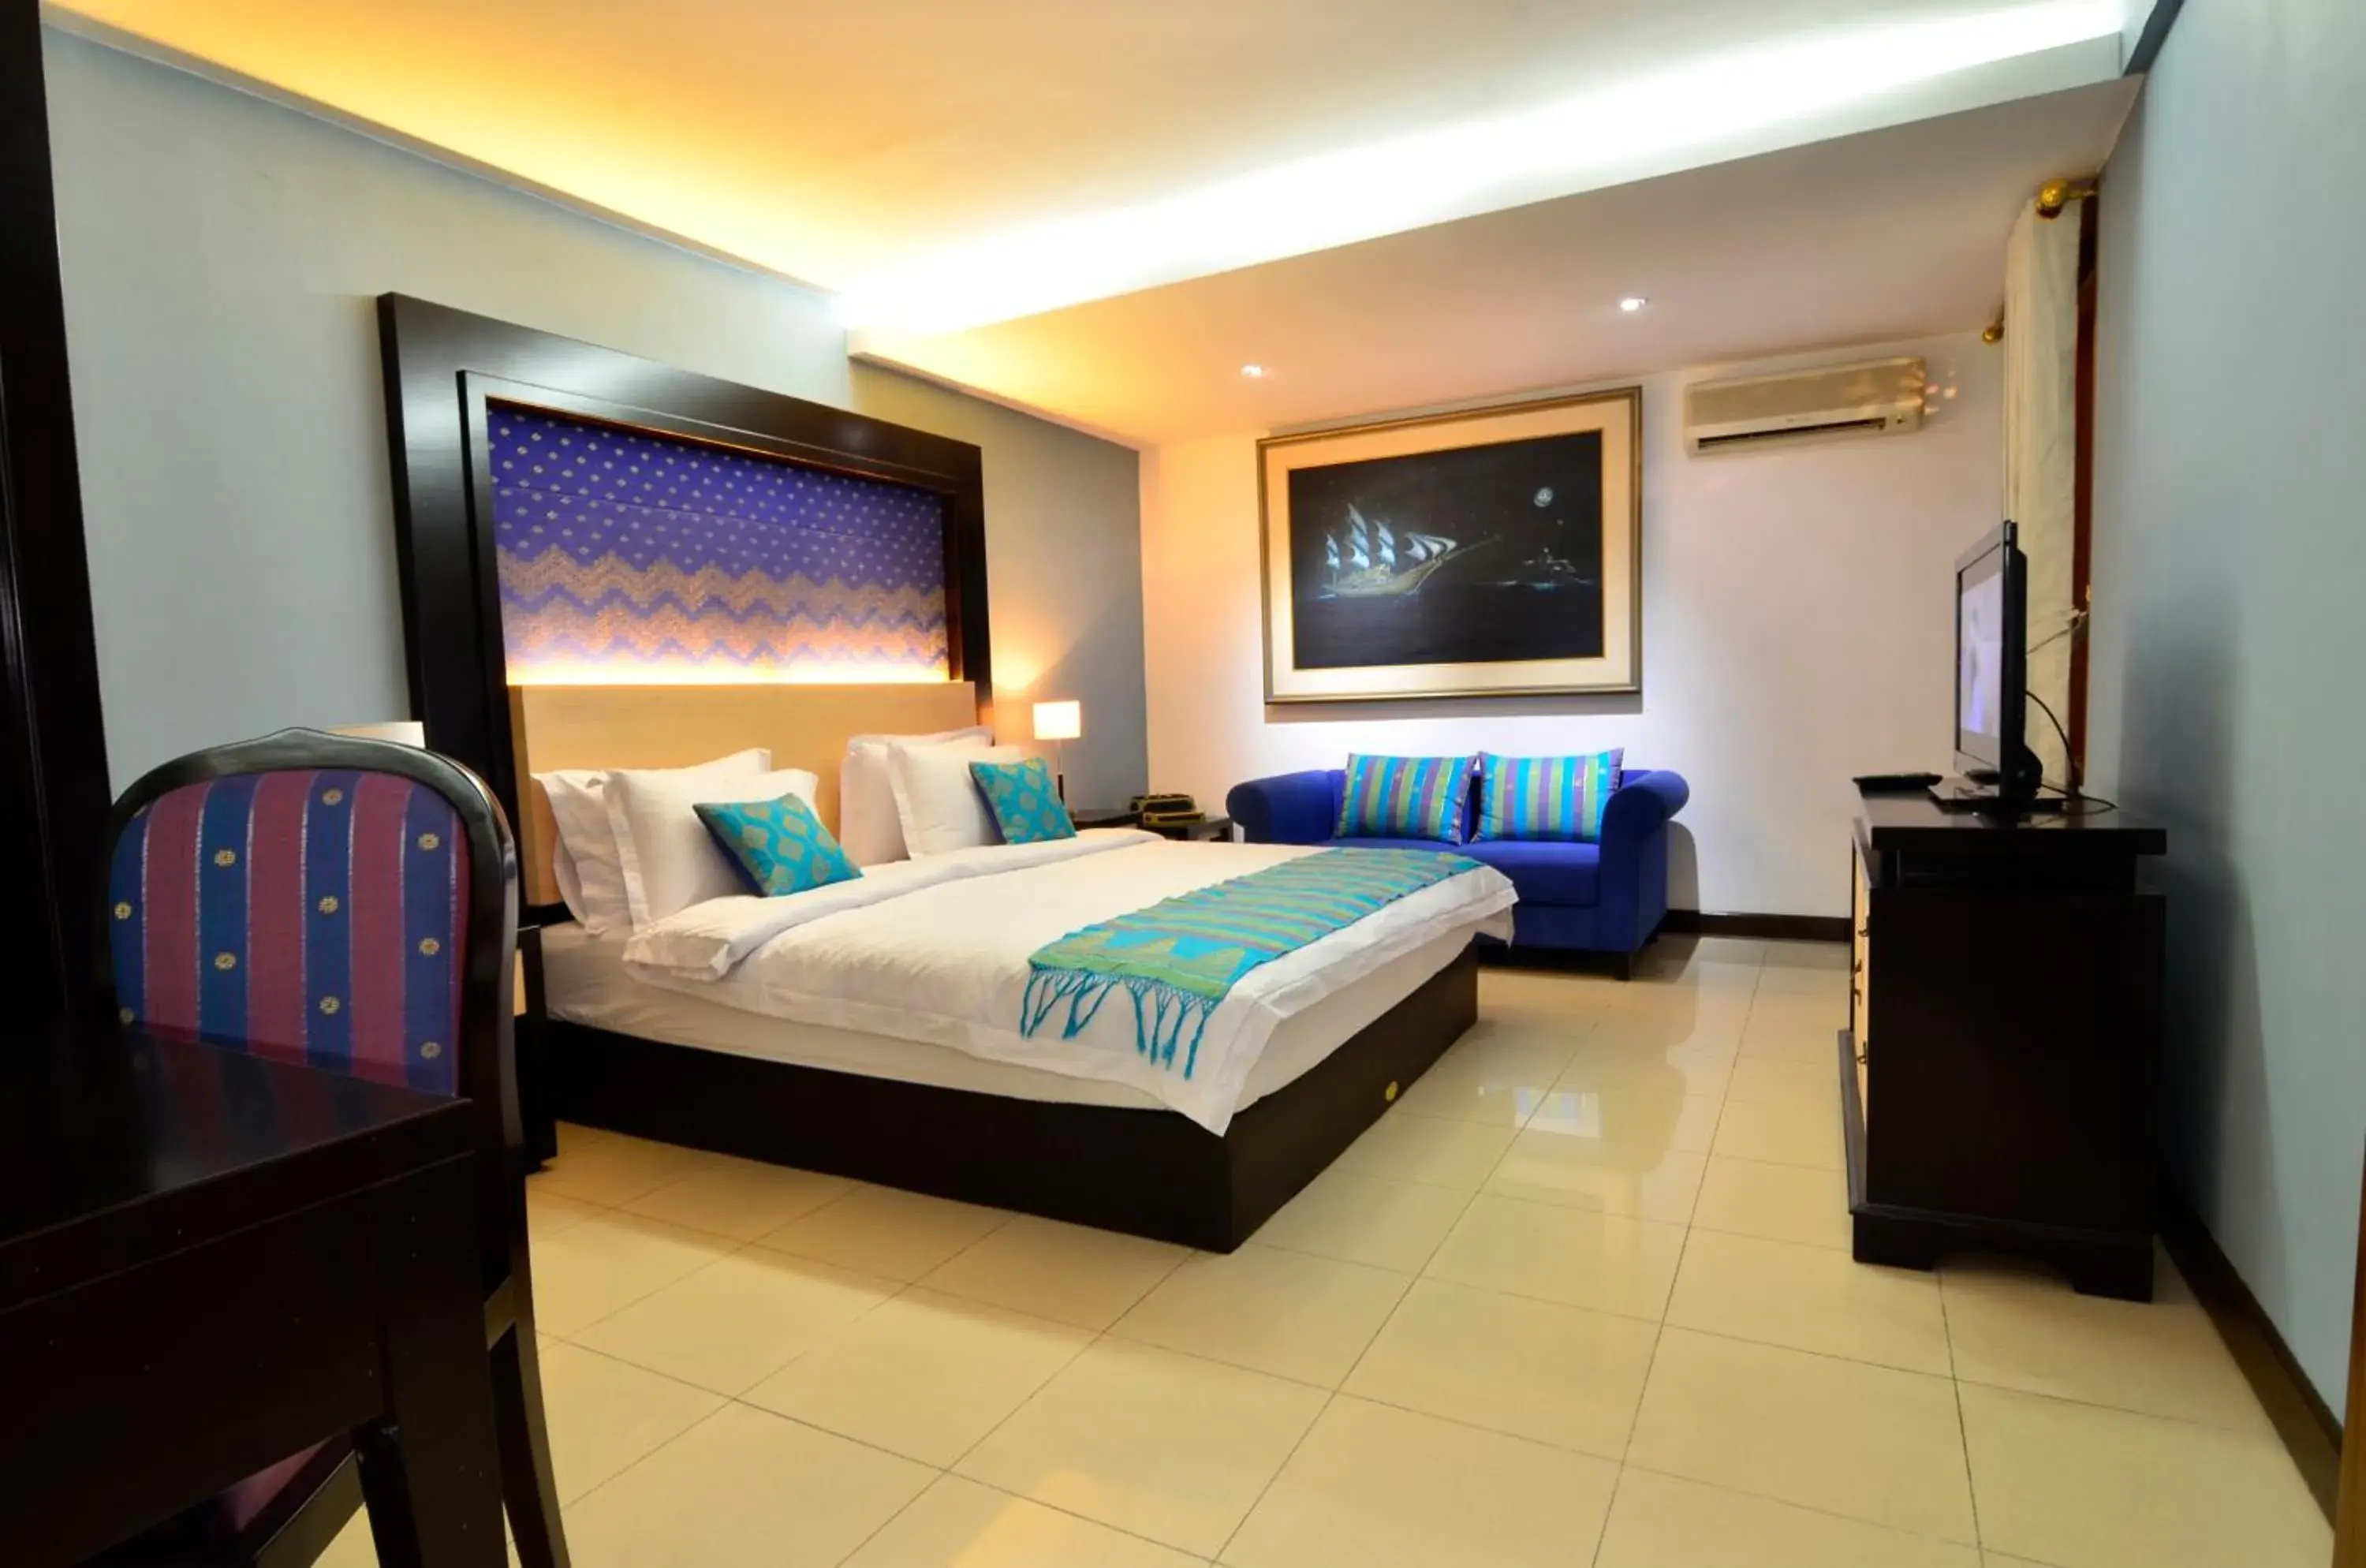 Photo of the whole room in Balai Melayu Hotel